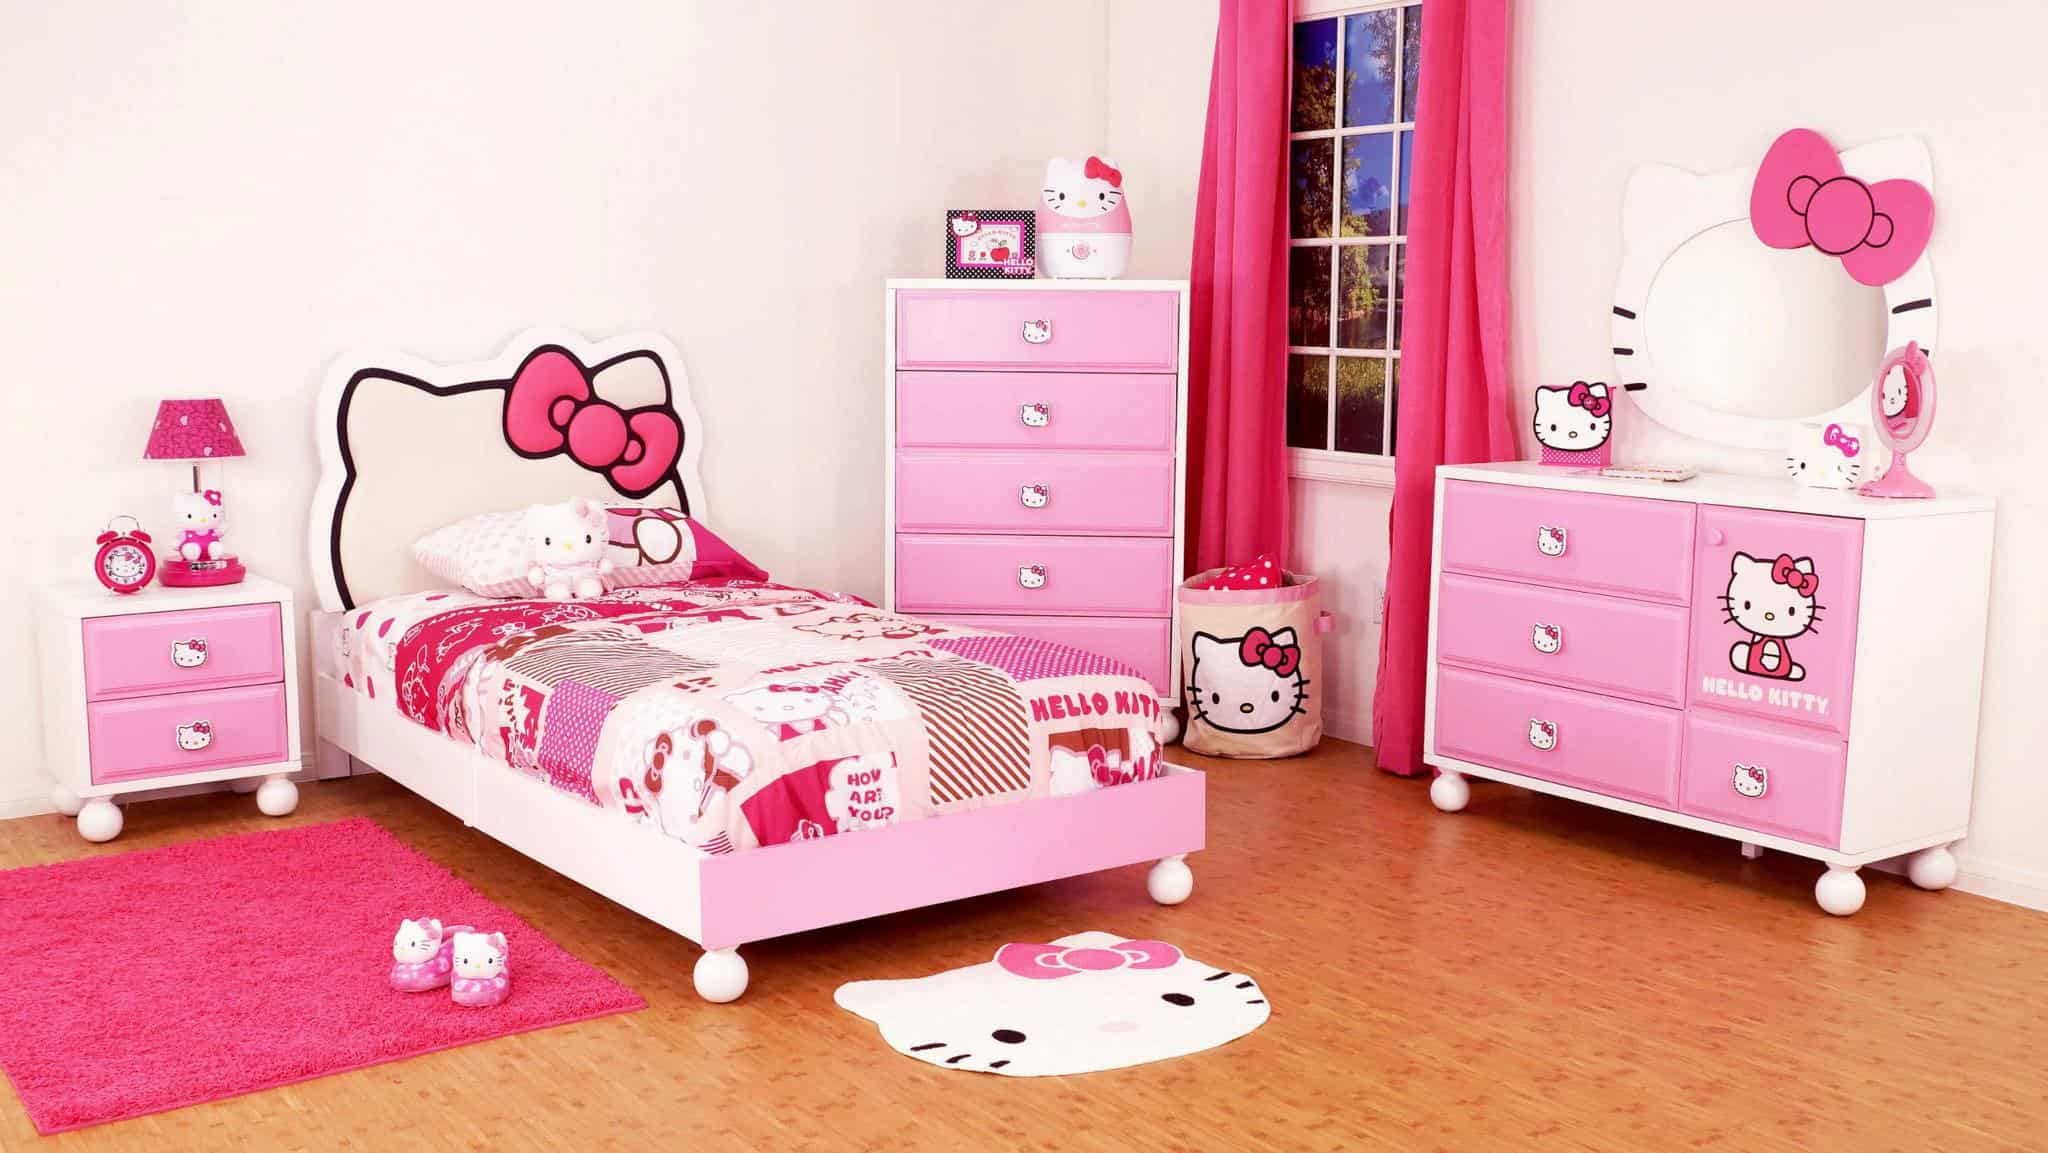 Hello Kitty Theme Kids Bedroom Interior Design